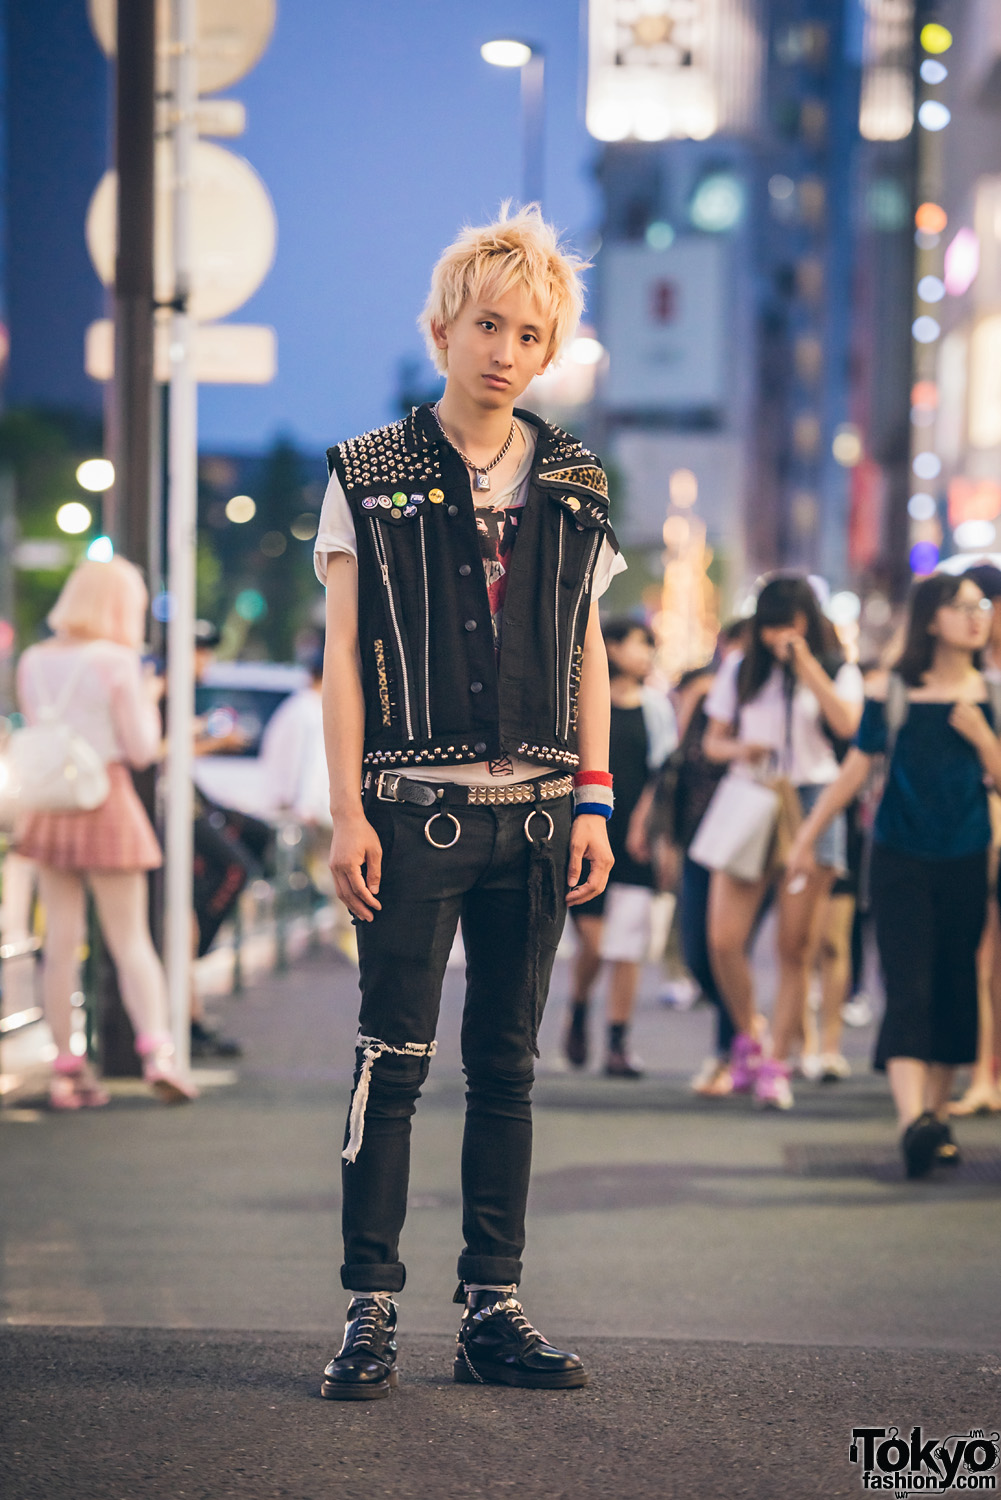 Harajuku Punk in Black Street Fashion w/ The Clash Studded Vest